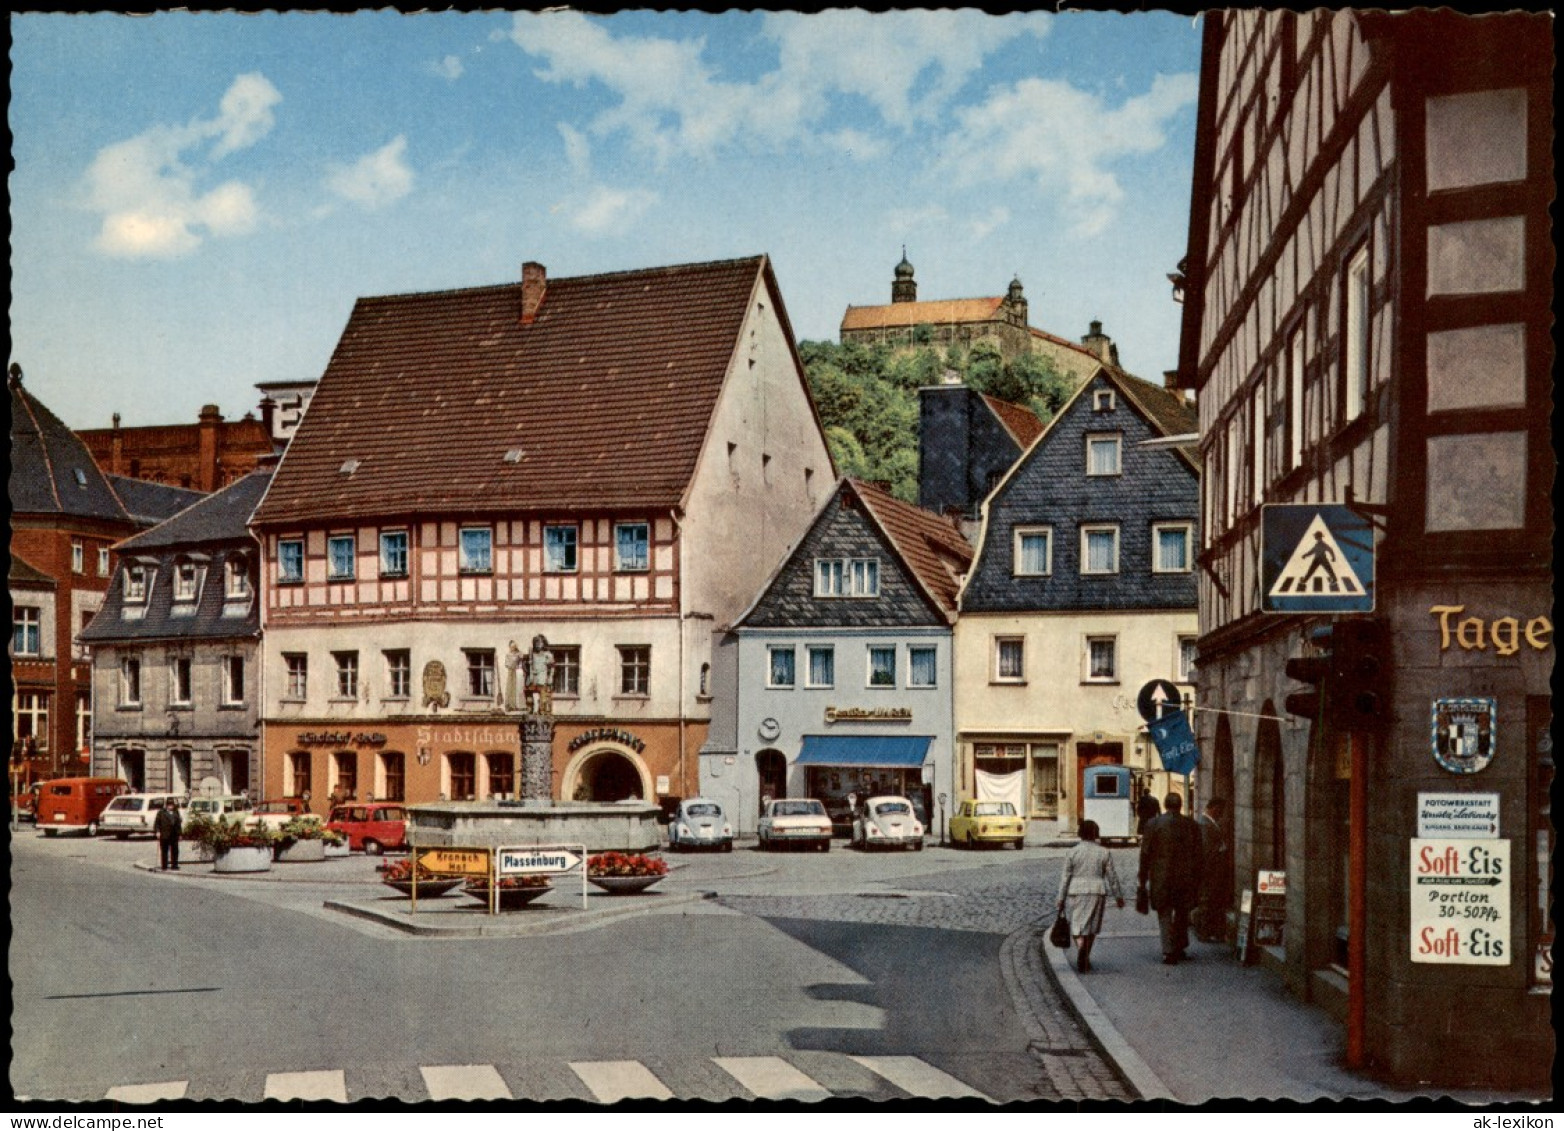 Ansichtskarte Kulmbach Strassen Kreuzung Am Holzmarkt 1970 - Kulmbach